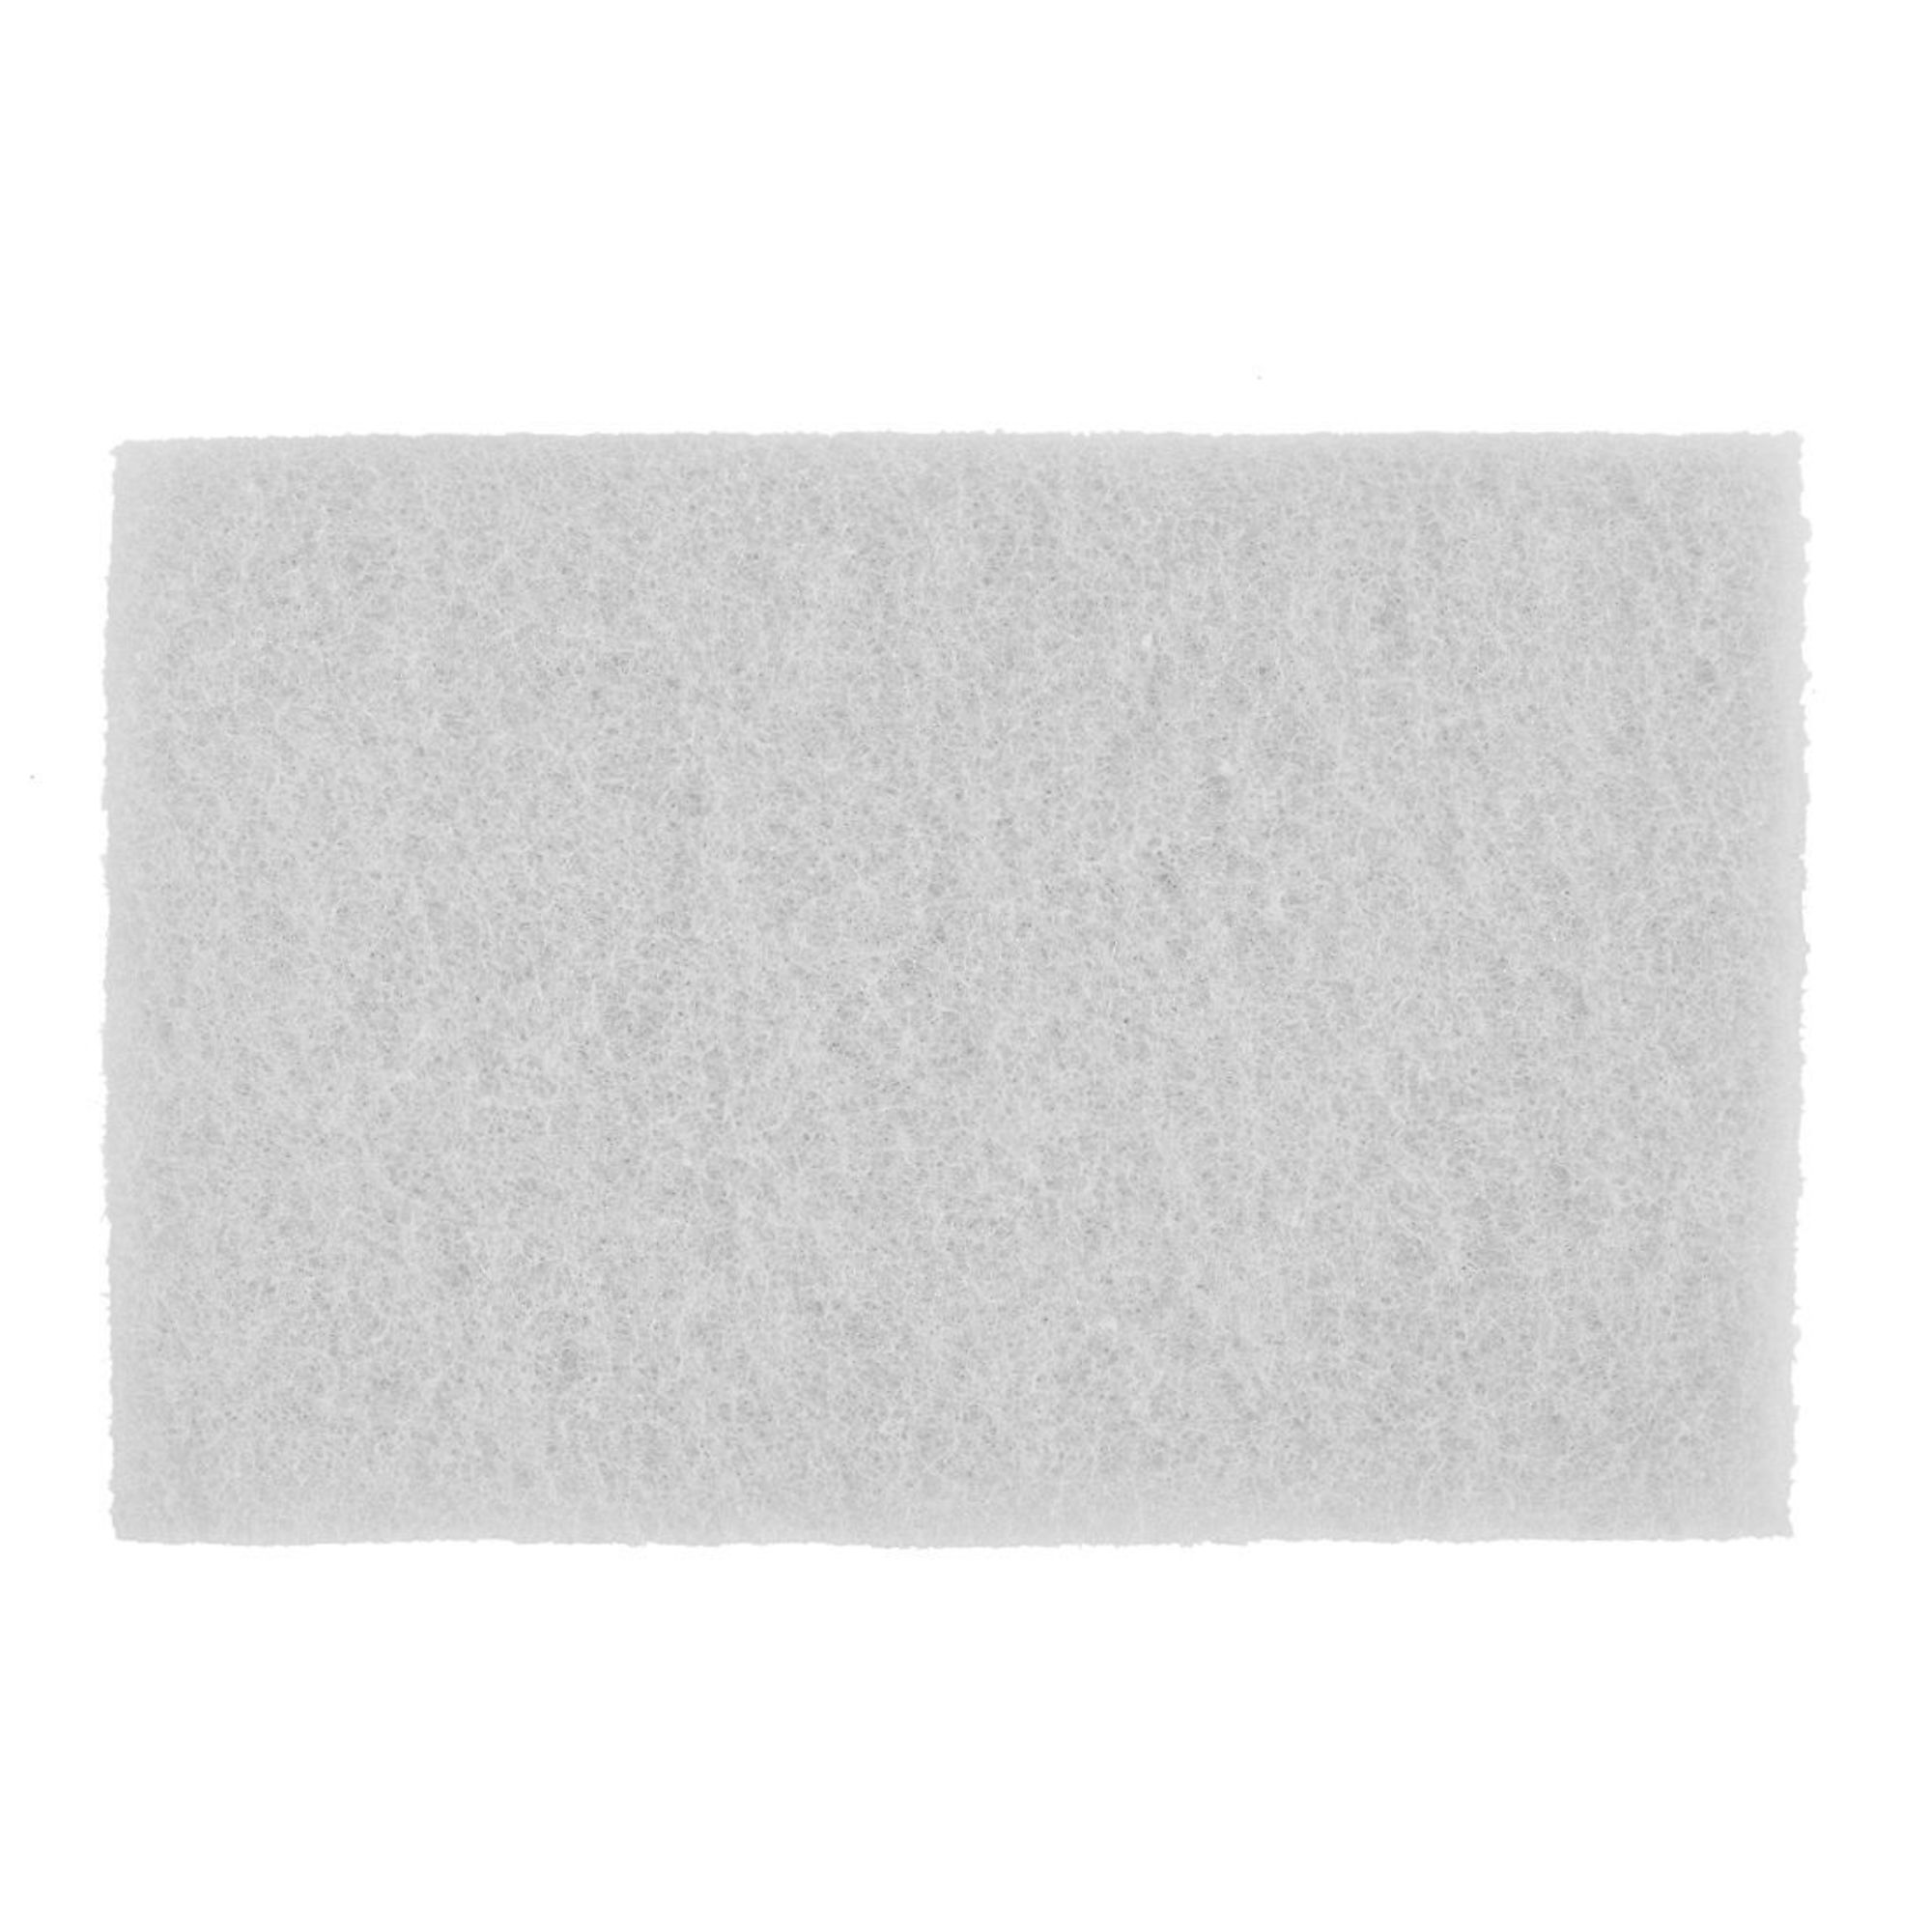 XERO, White Scrub Pad - Pack of Ten, Model 209-15-37